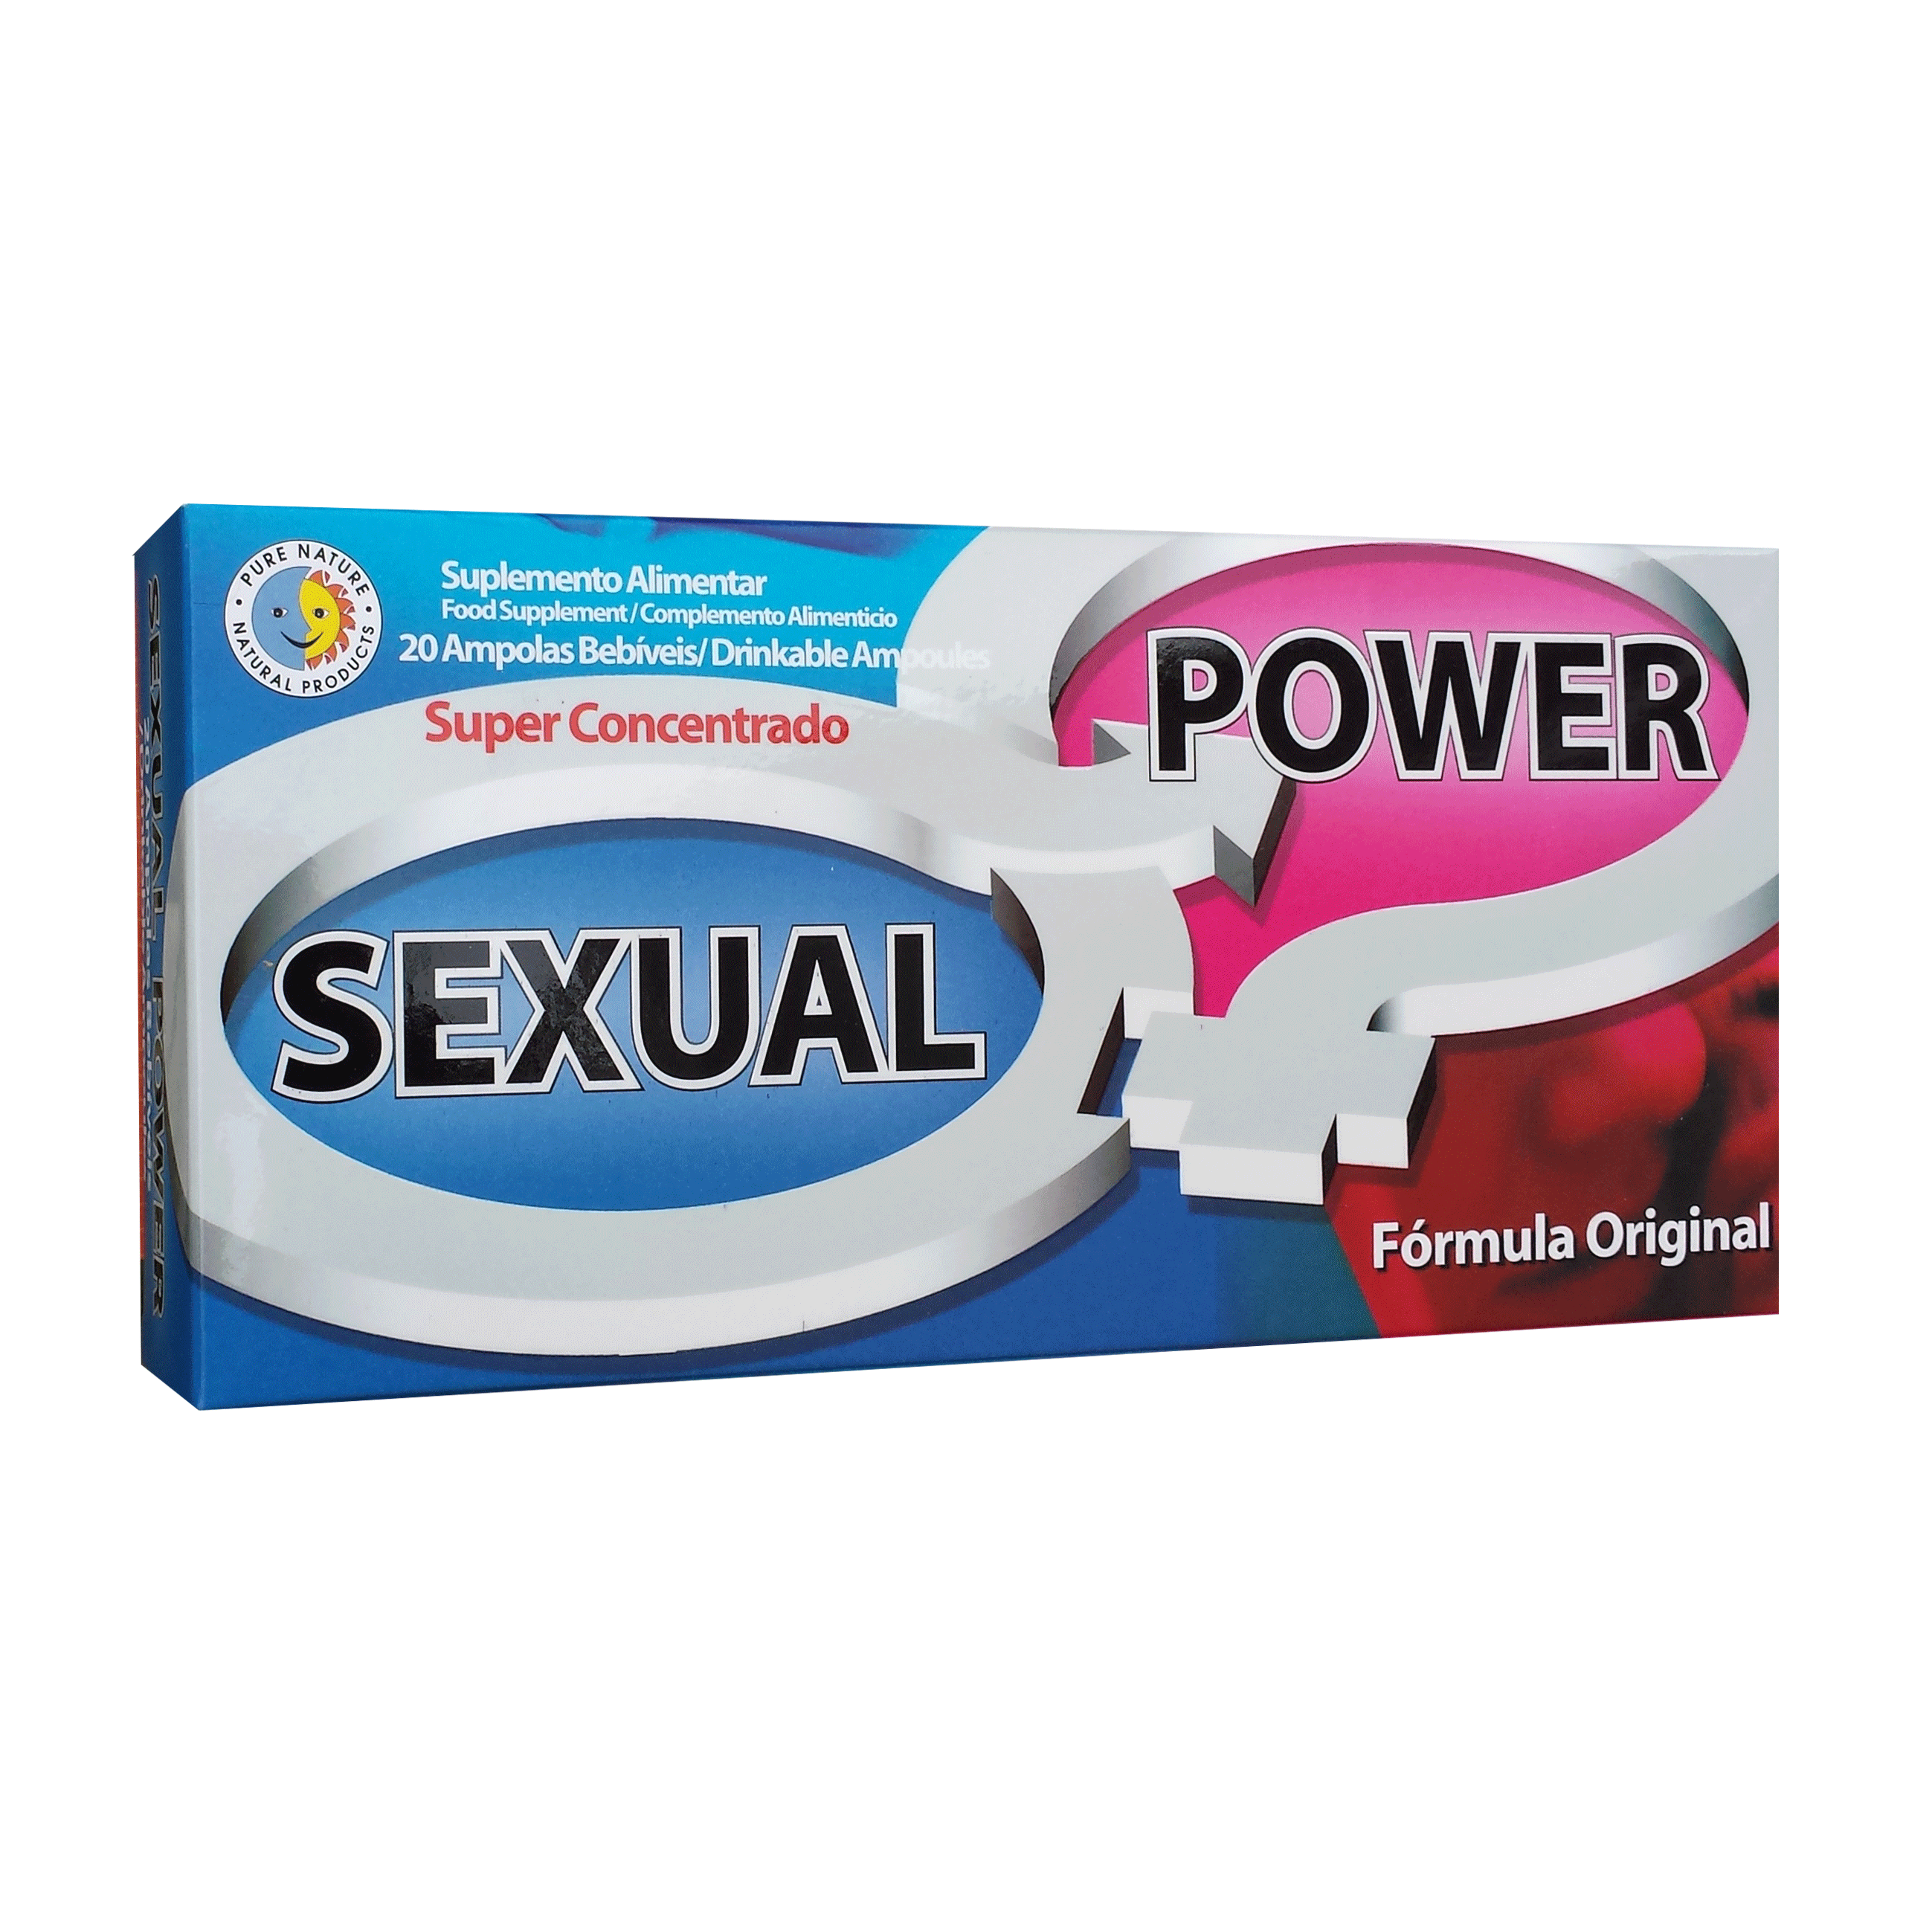 Sexual Power ampolas